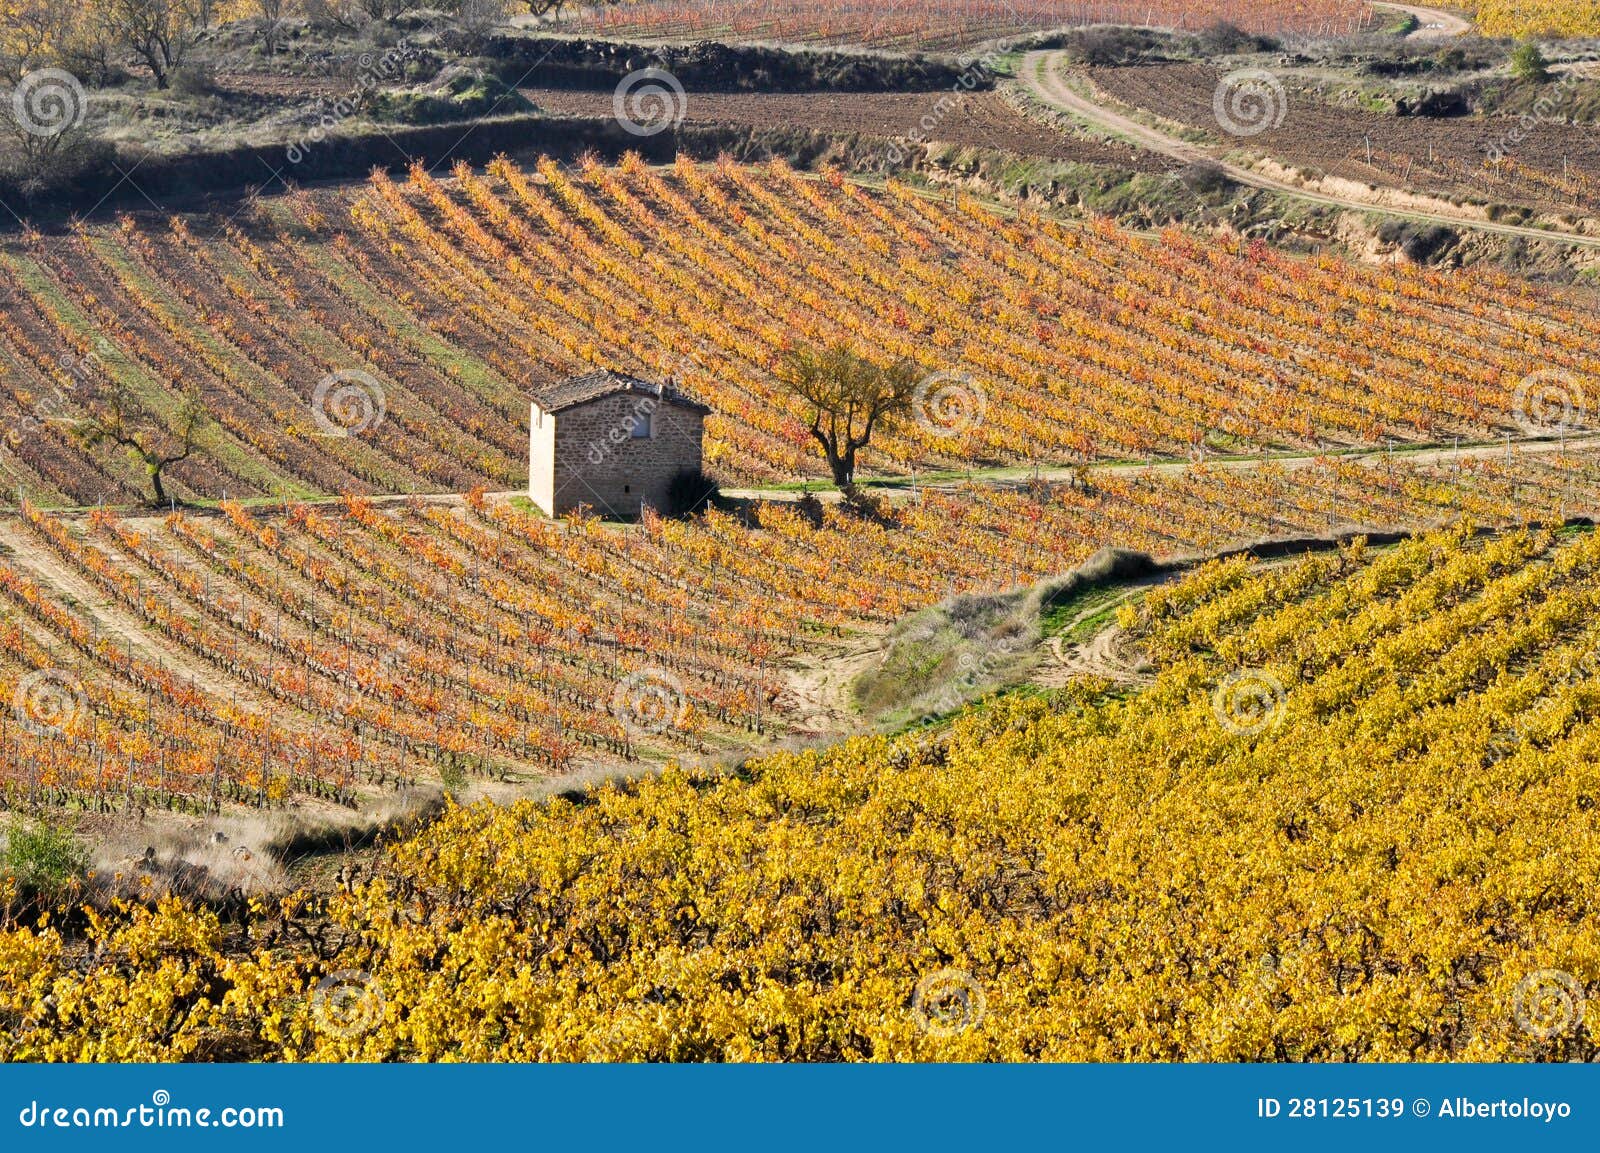 vineyards in autumn, la rioja, spain